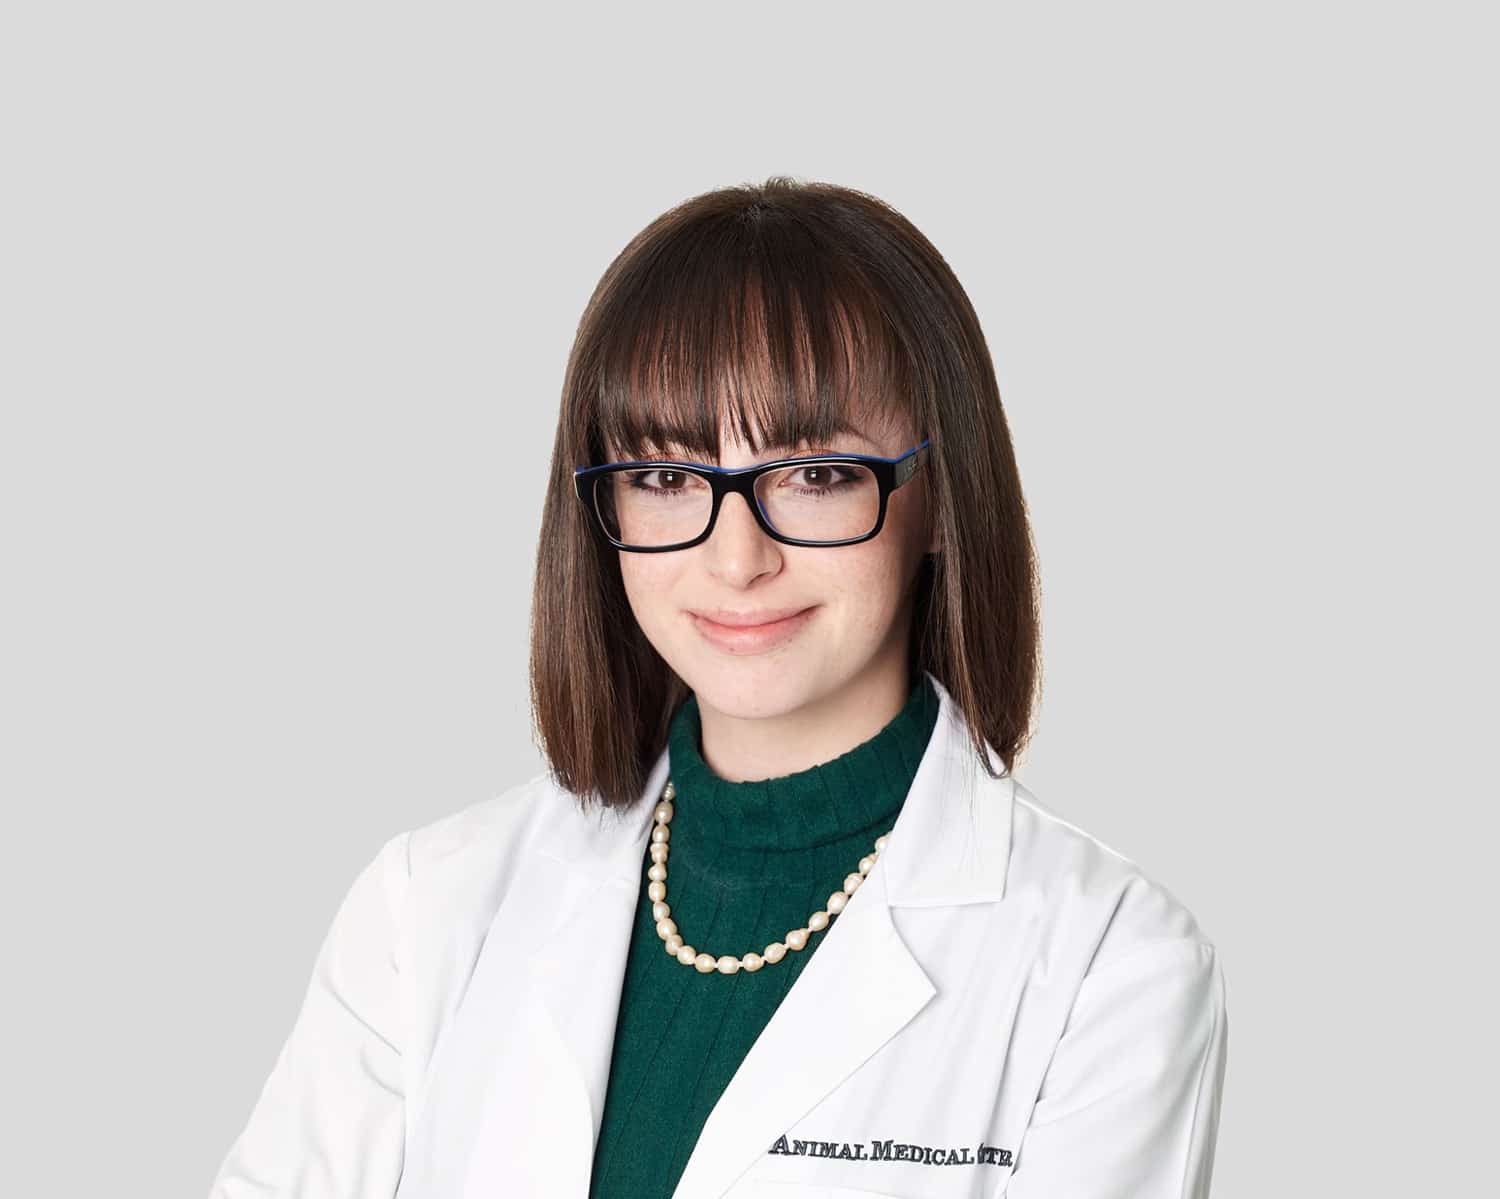 Dr. Alexandra Kravitz